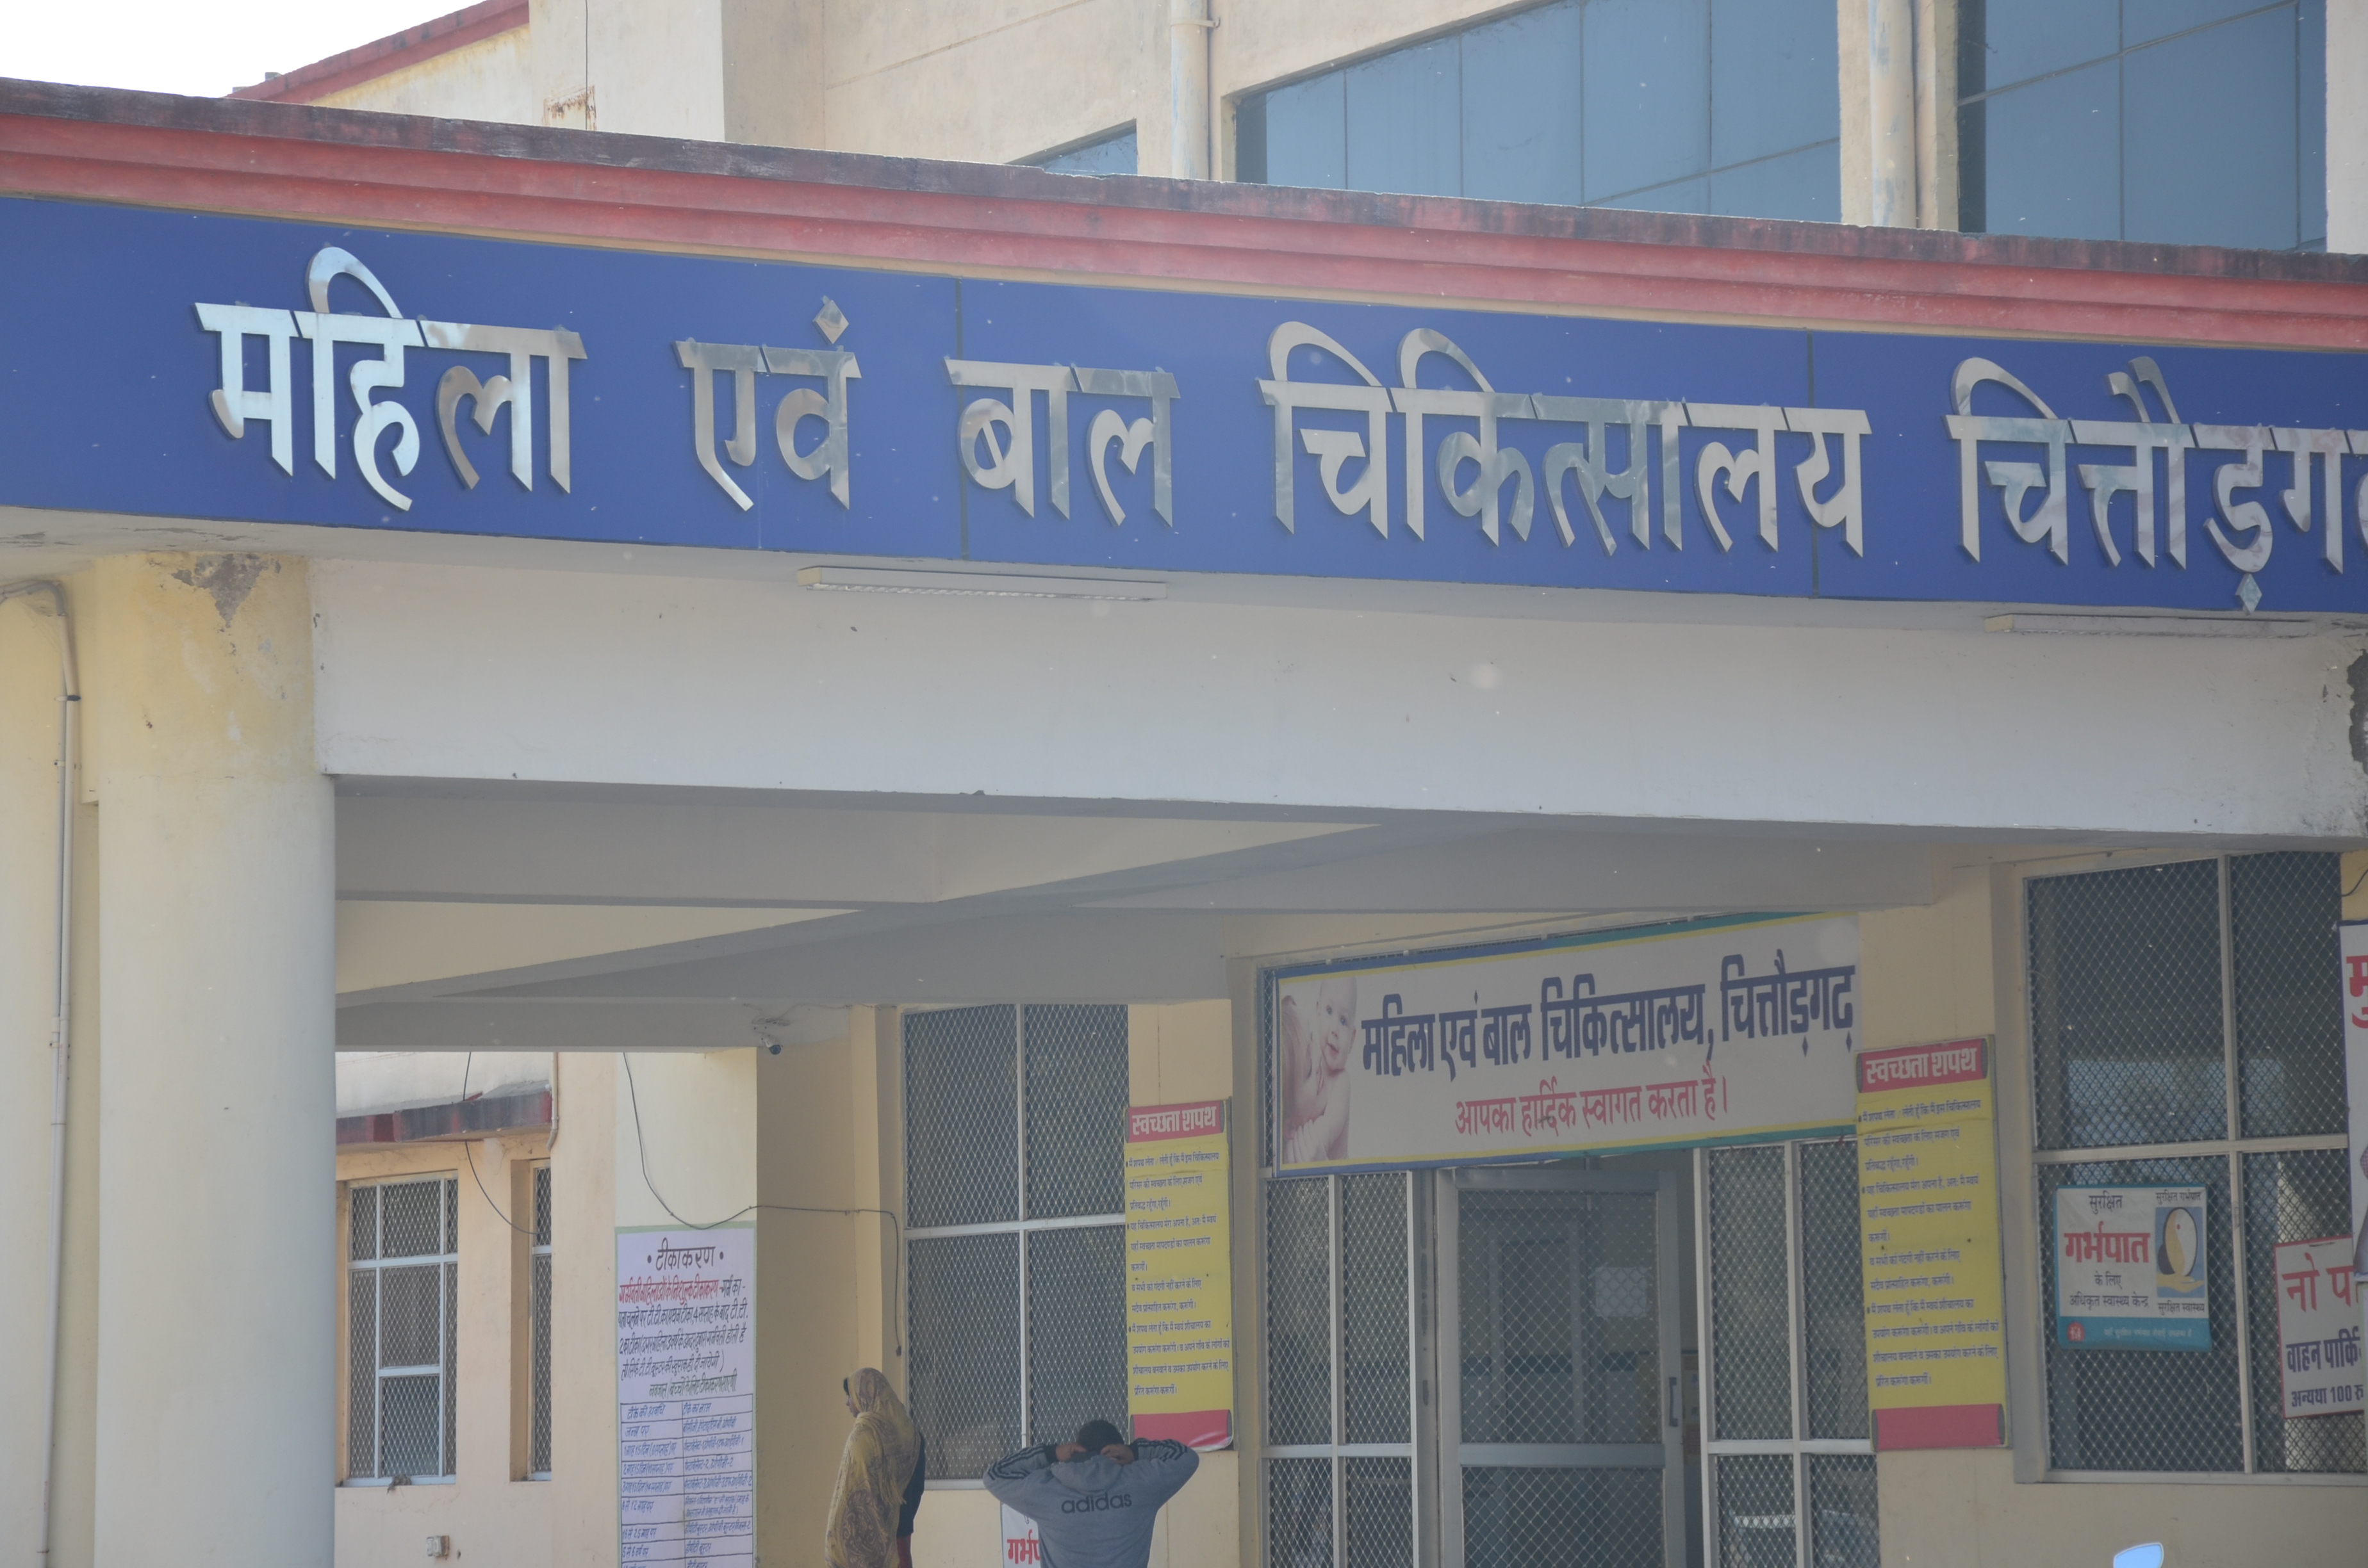 hospital, Chittorgarh, Chittorgarh news, Chittorgarh Hindi news, Chittorgarh local news, chittorgarh samachar, Hospital personnel recovery illegal money from patients